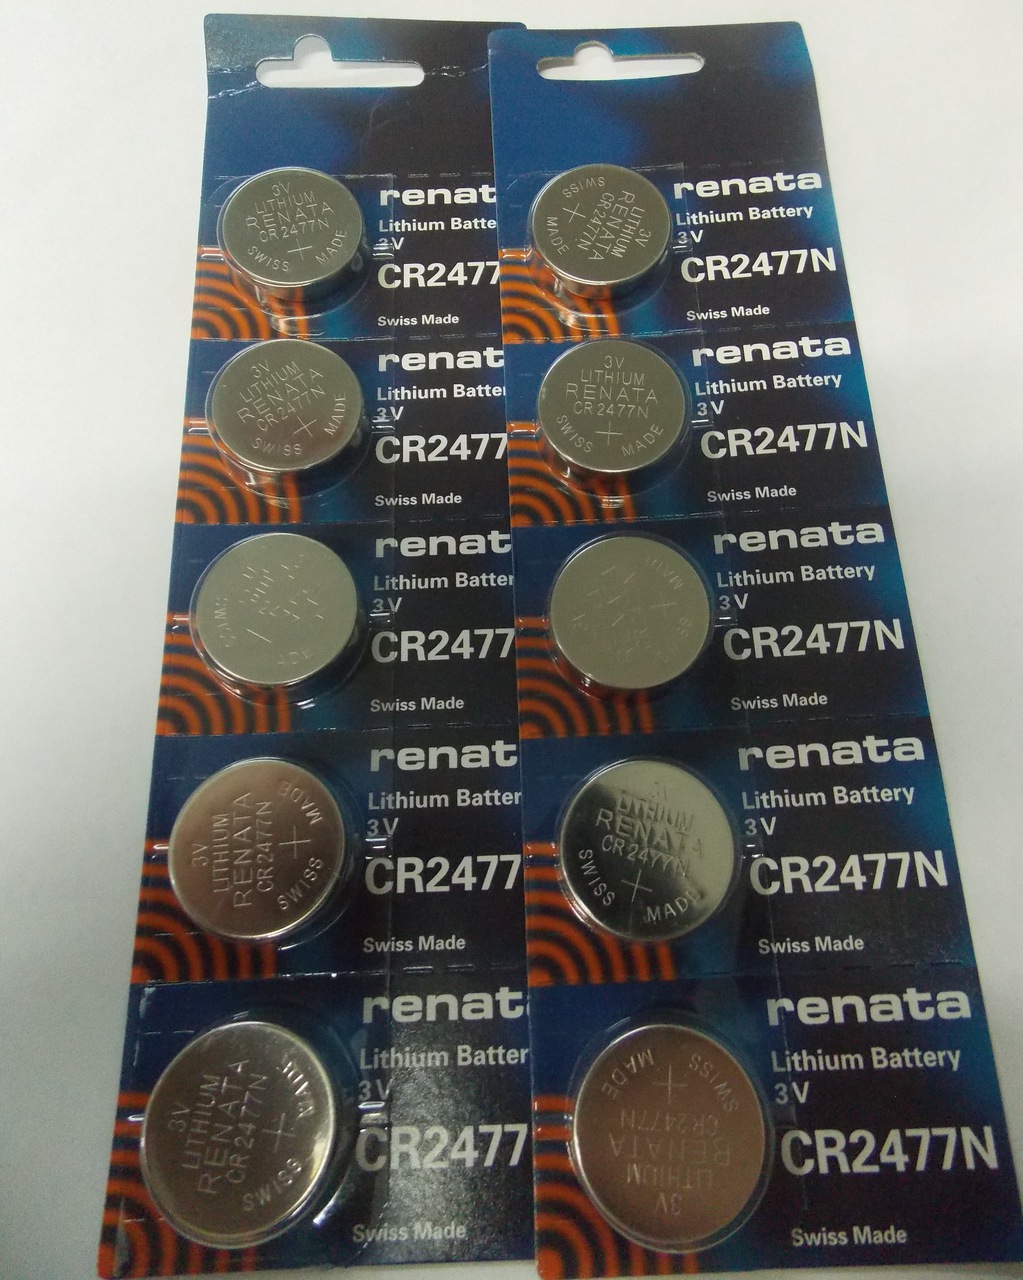 Renata CR2477N 3V Lithium Coin Battery - 10 Pack + FREE SHIPPING